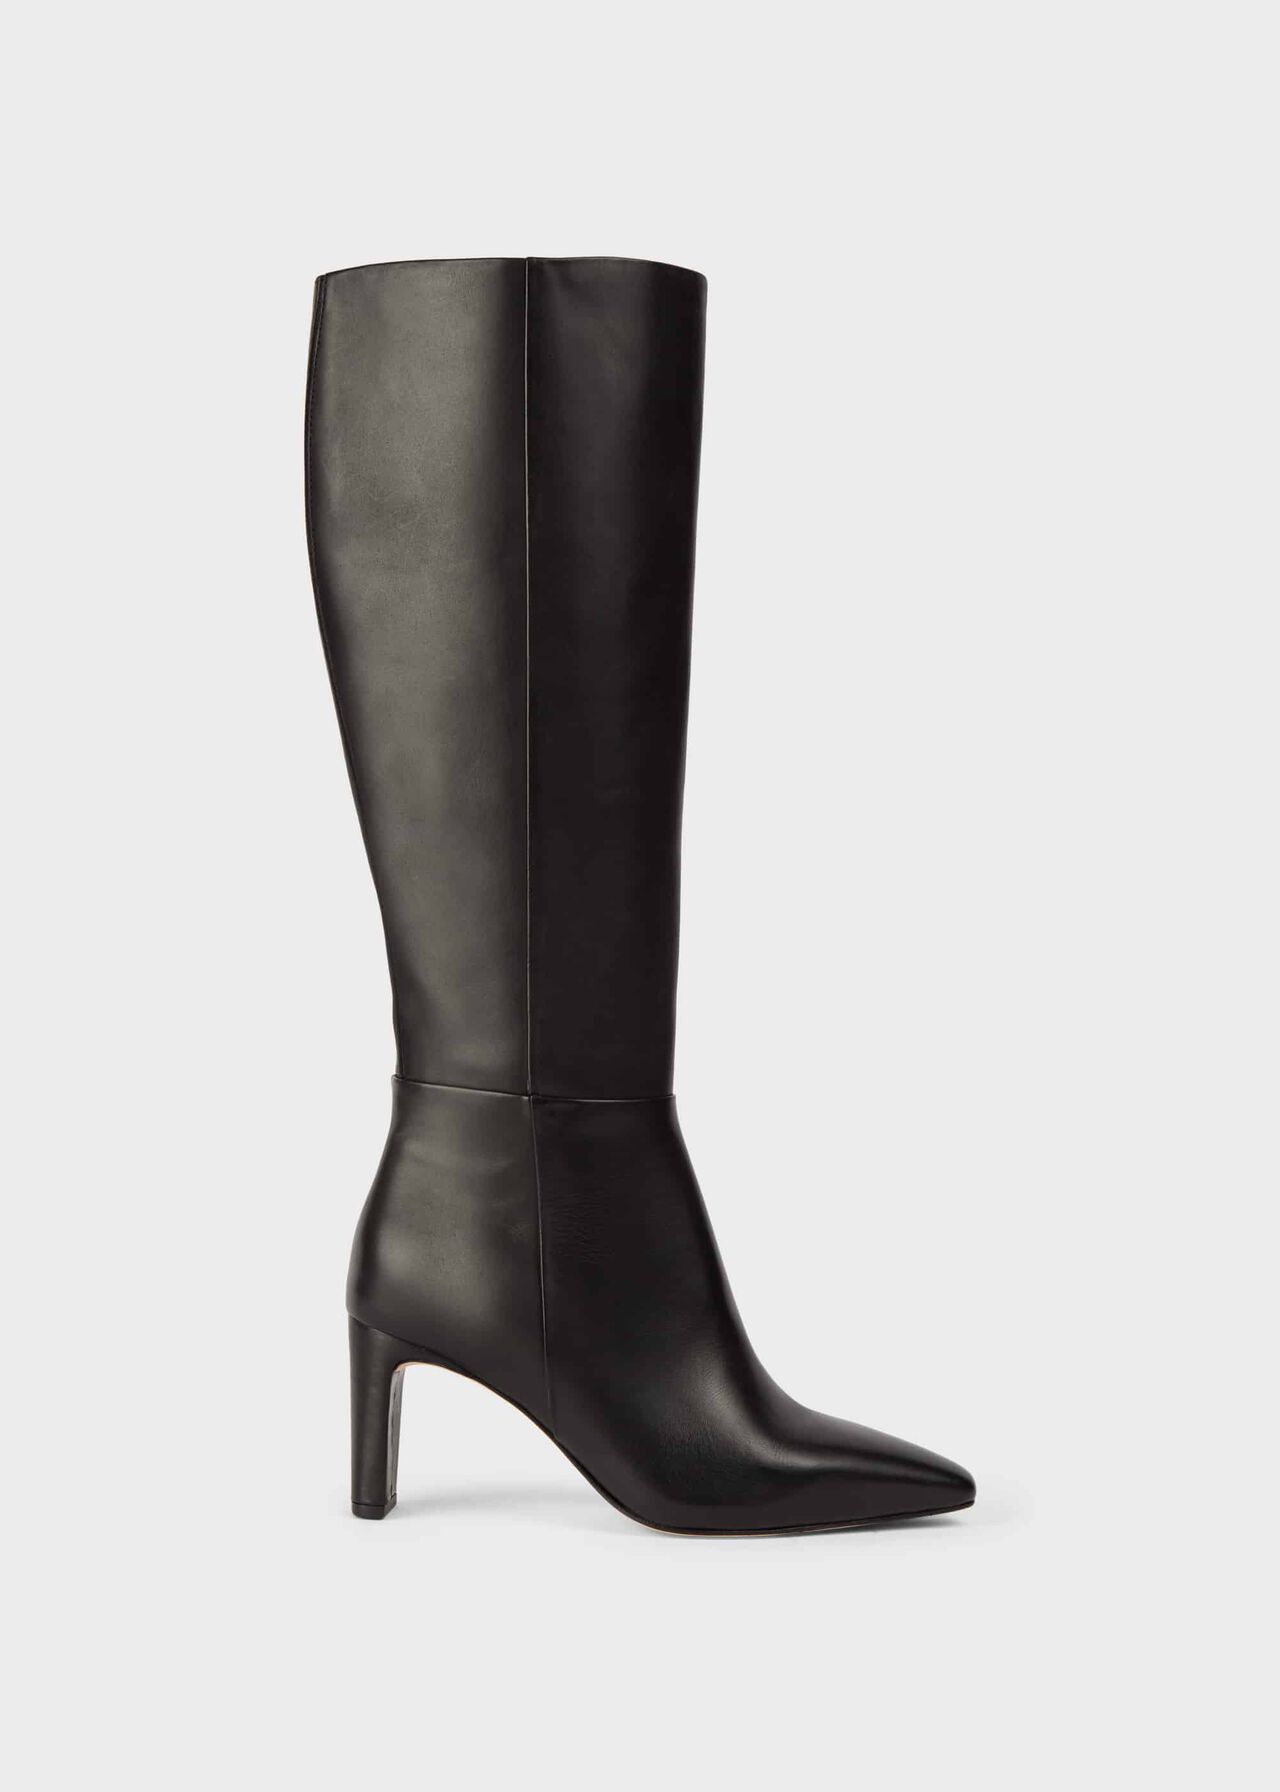 Alma Leather Knee Boots, Black, hi-res